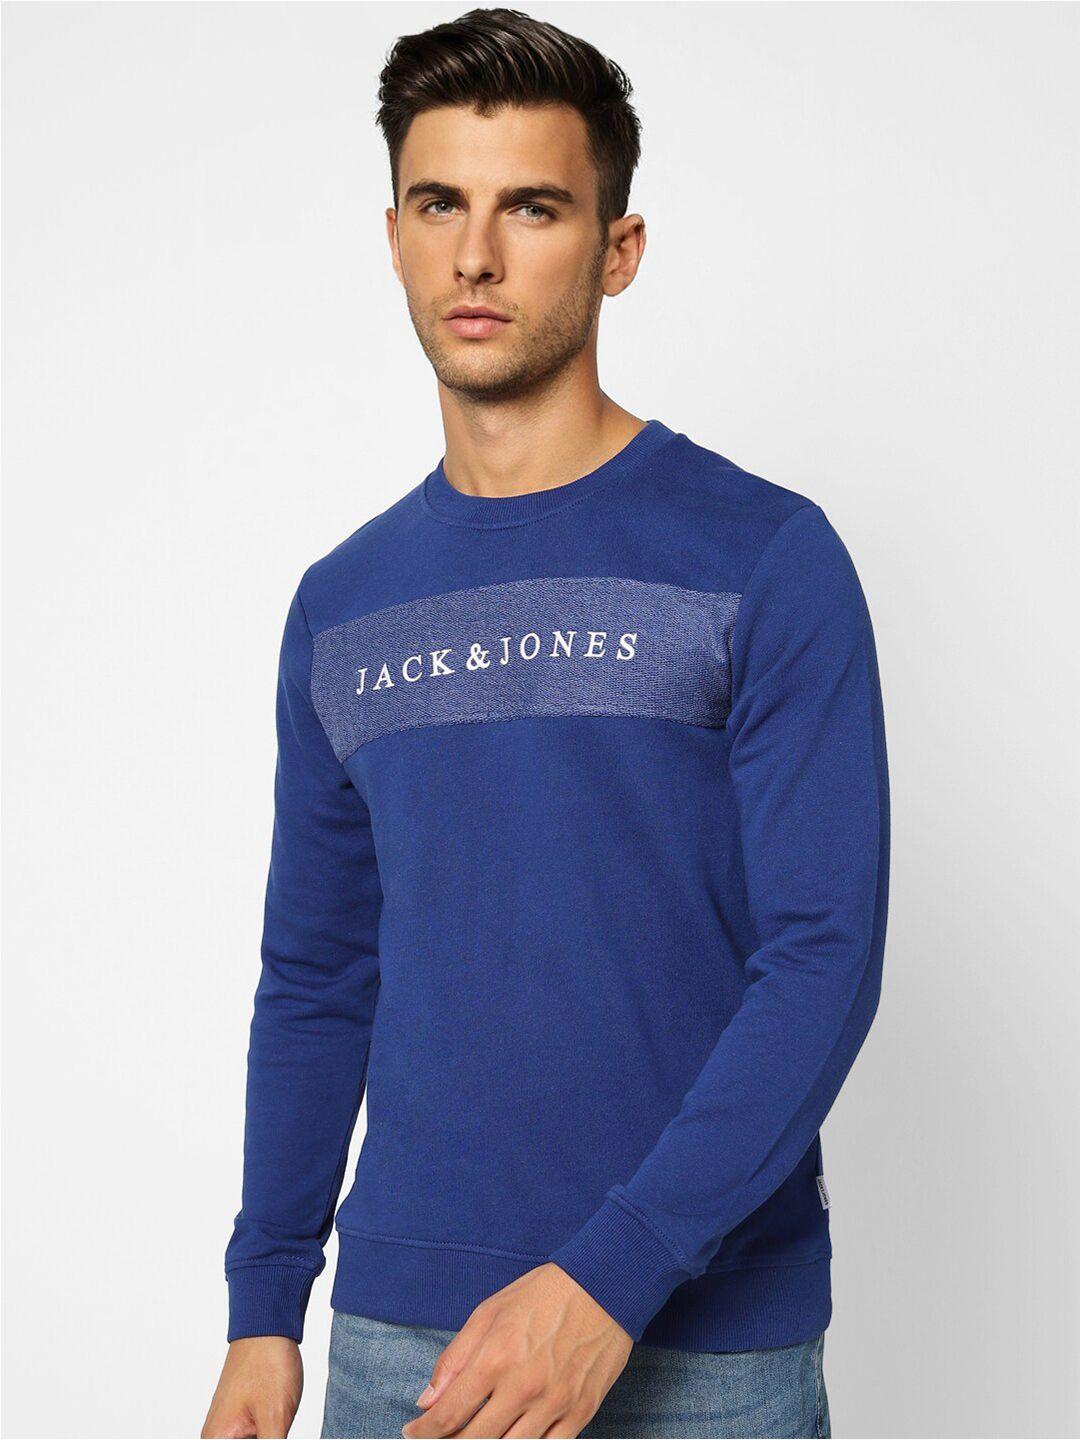 jack & jones men blue printed sweatshirt